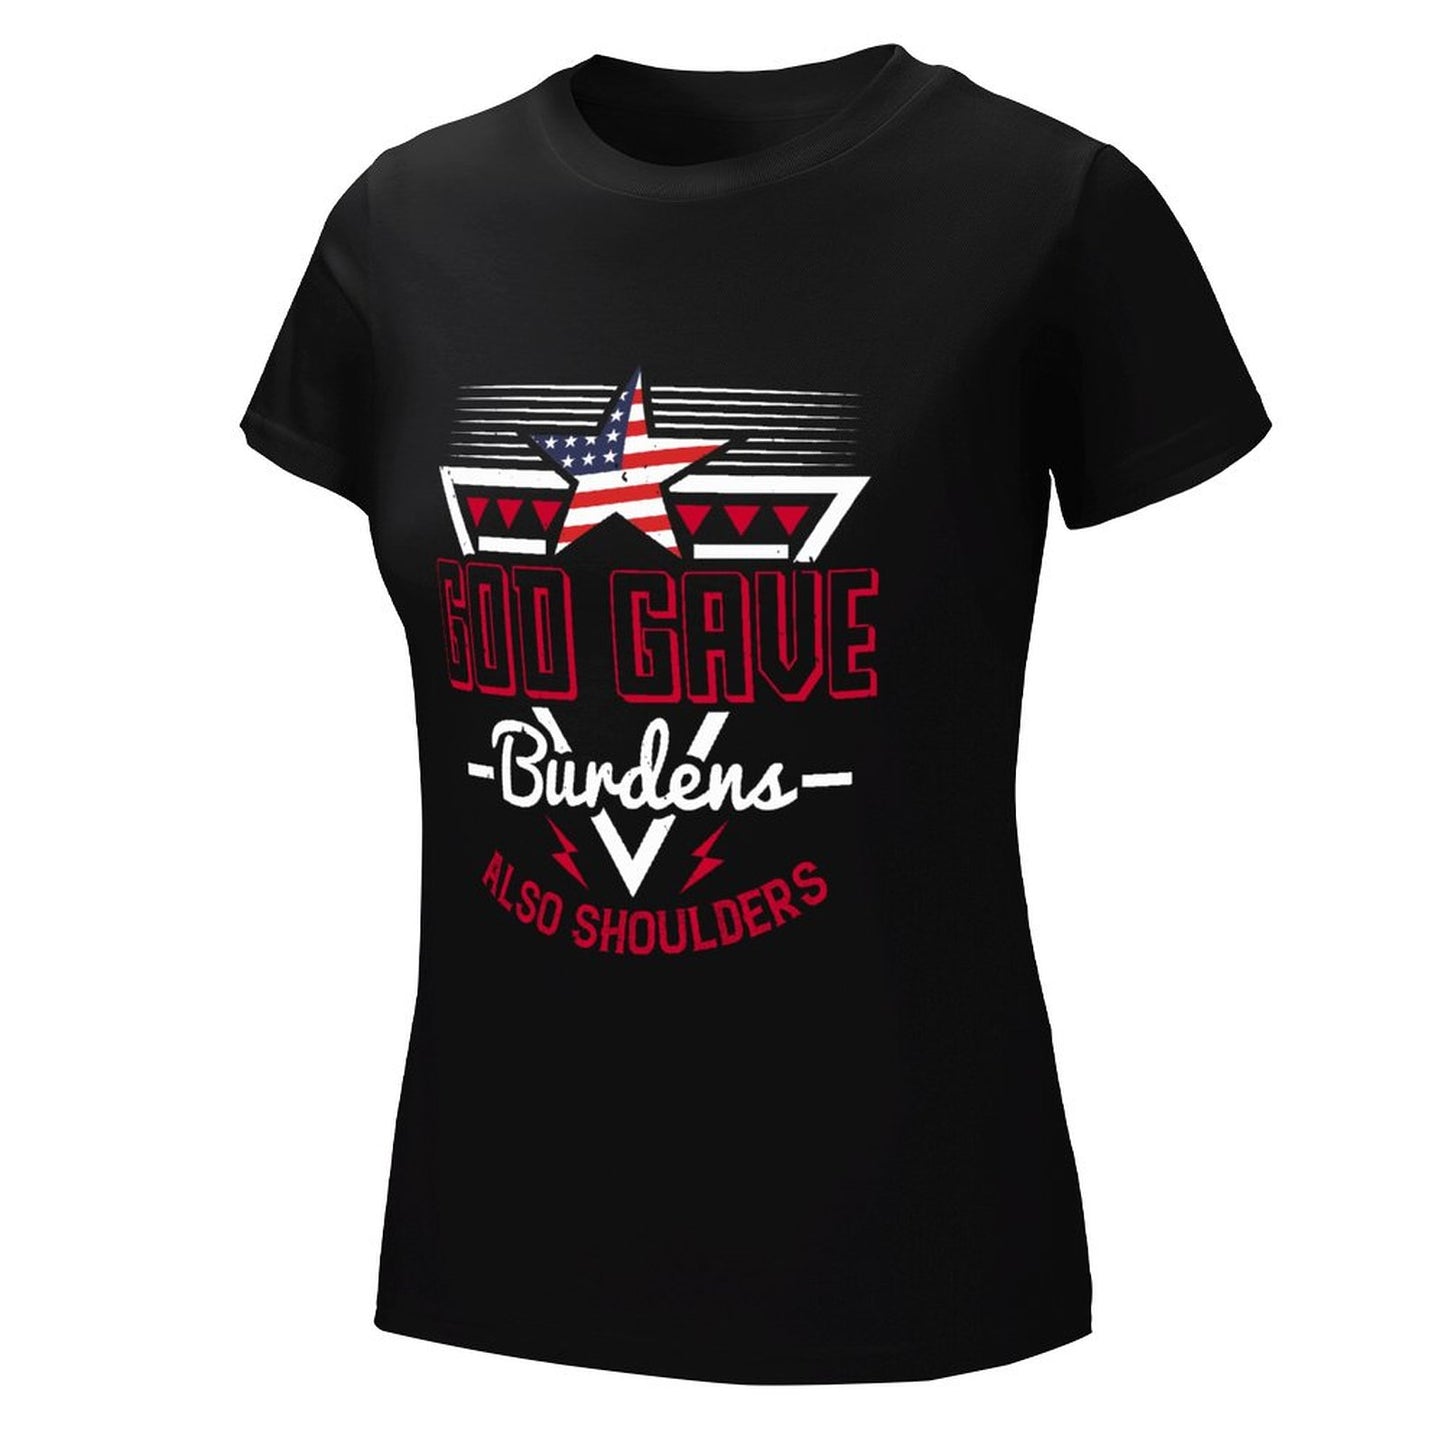 God Gave Burdens Also Shoulders Patriotic Women's Christian T-shirt SALE-Personal Design